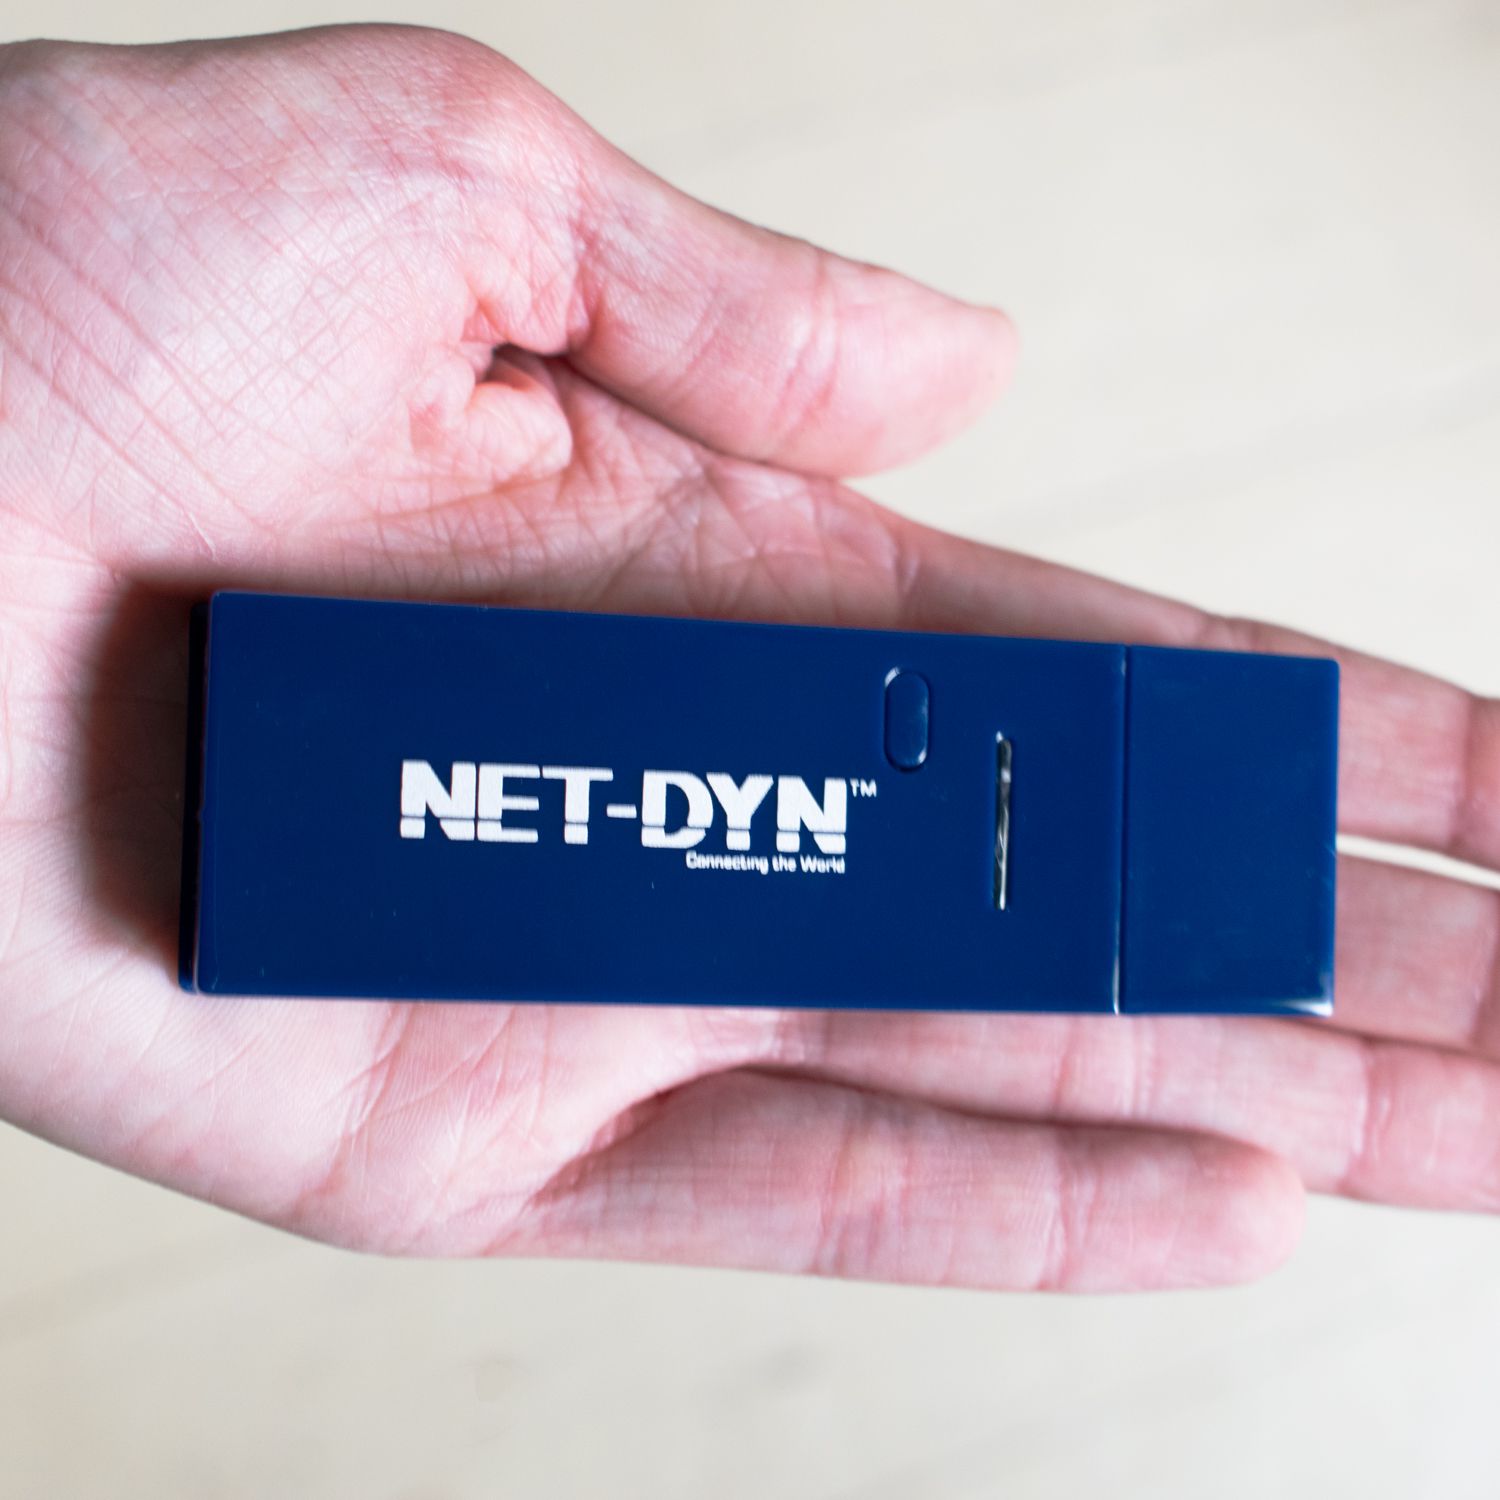 NetDyn Wifi USB Adaptor HeroSquare 5eb2671495ab4040952e6daf6767970f